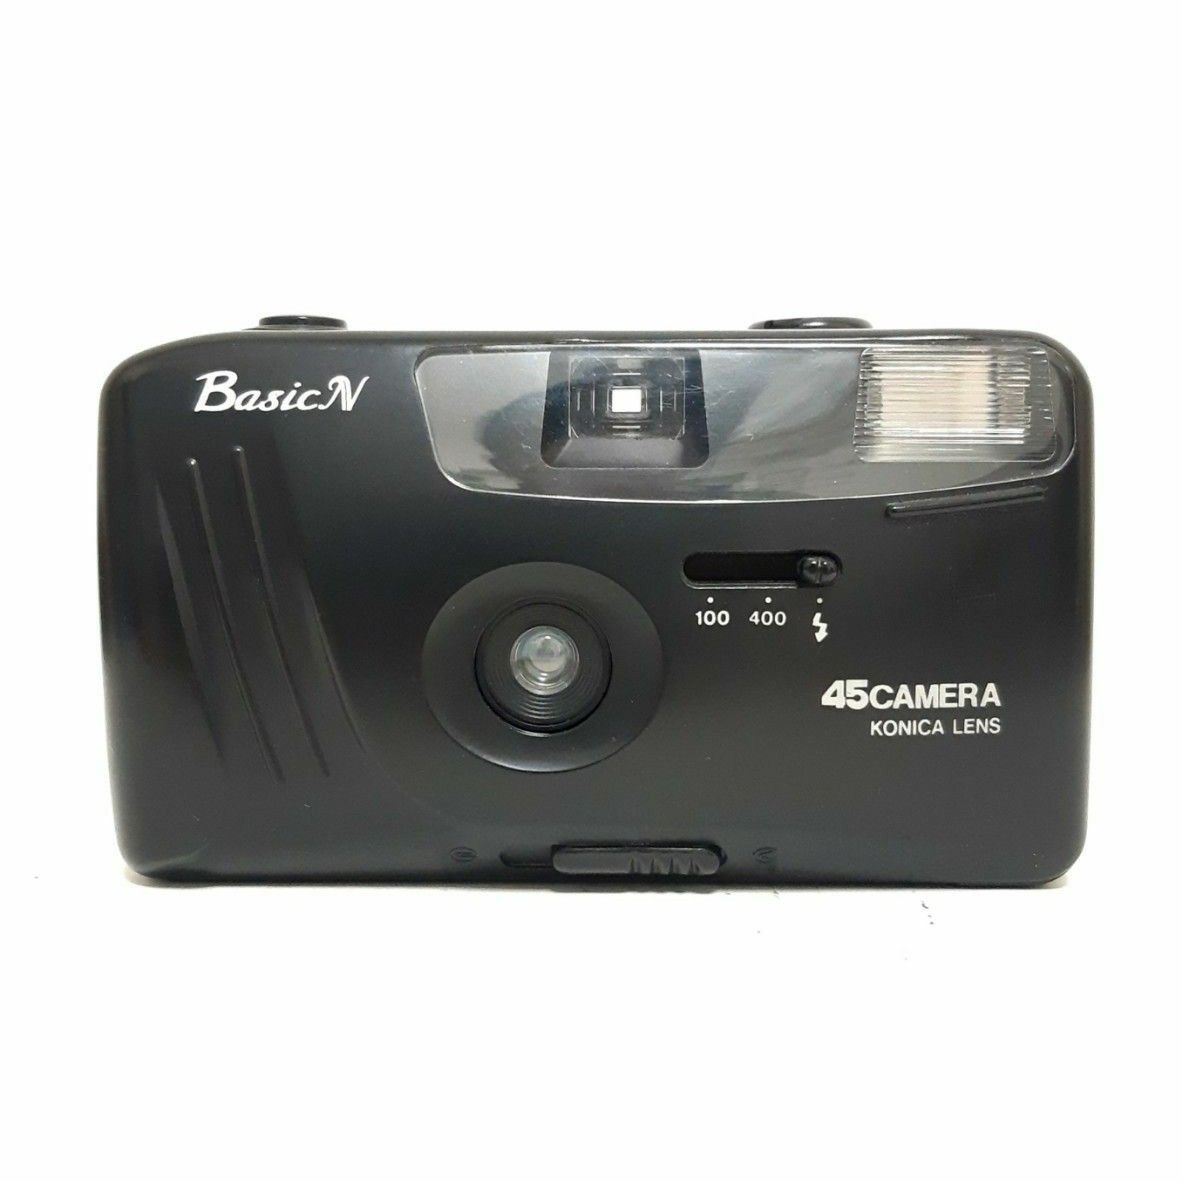 45 camera」Basic N フイルムカメラ｜PayPayフリマ